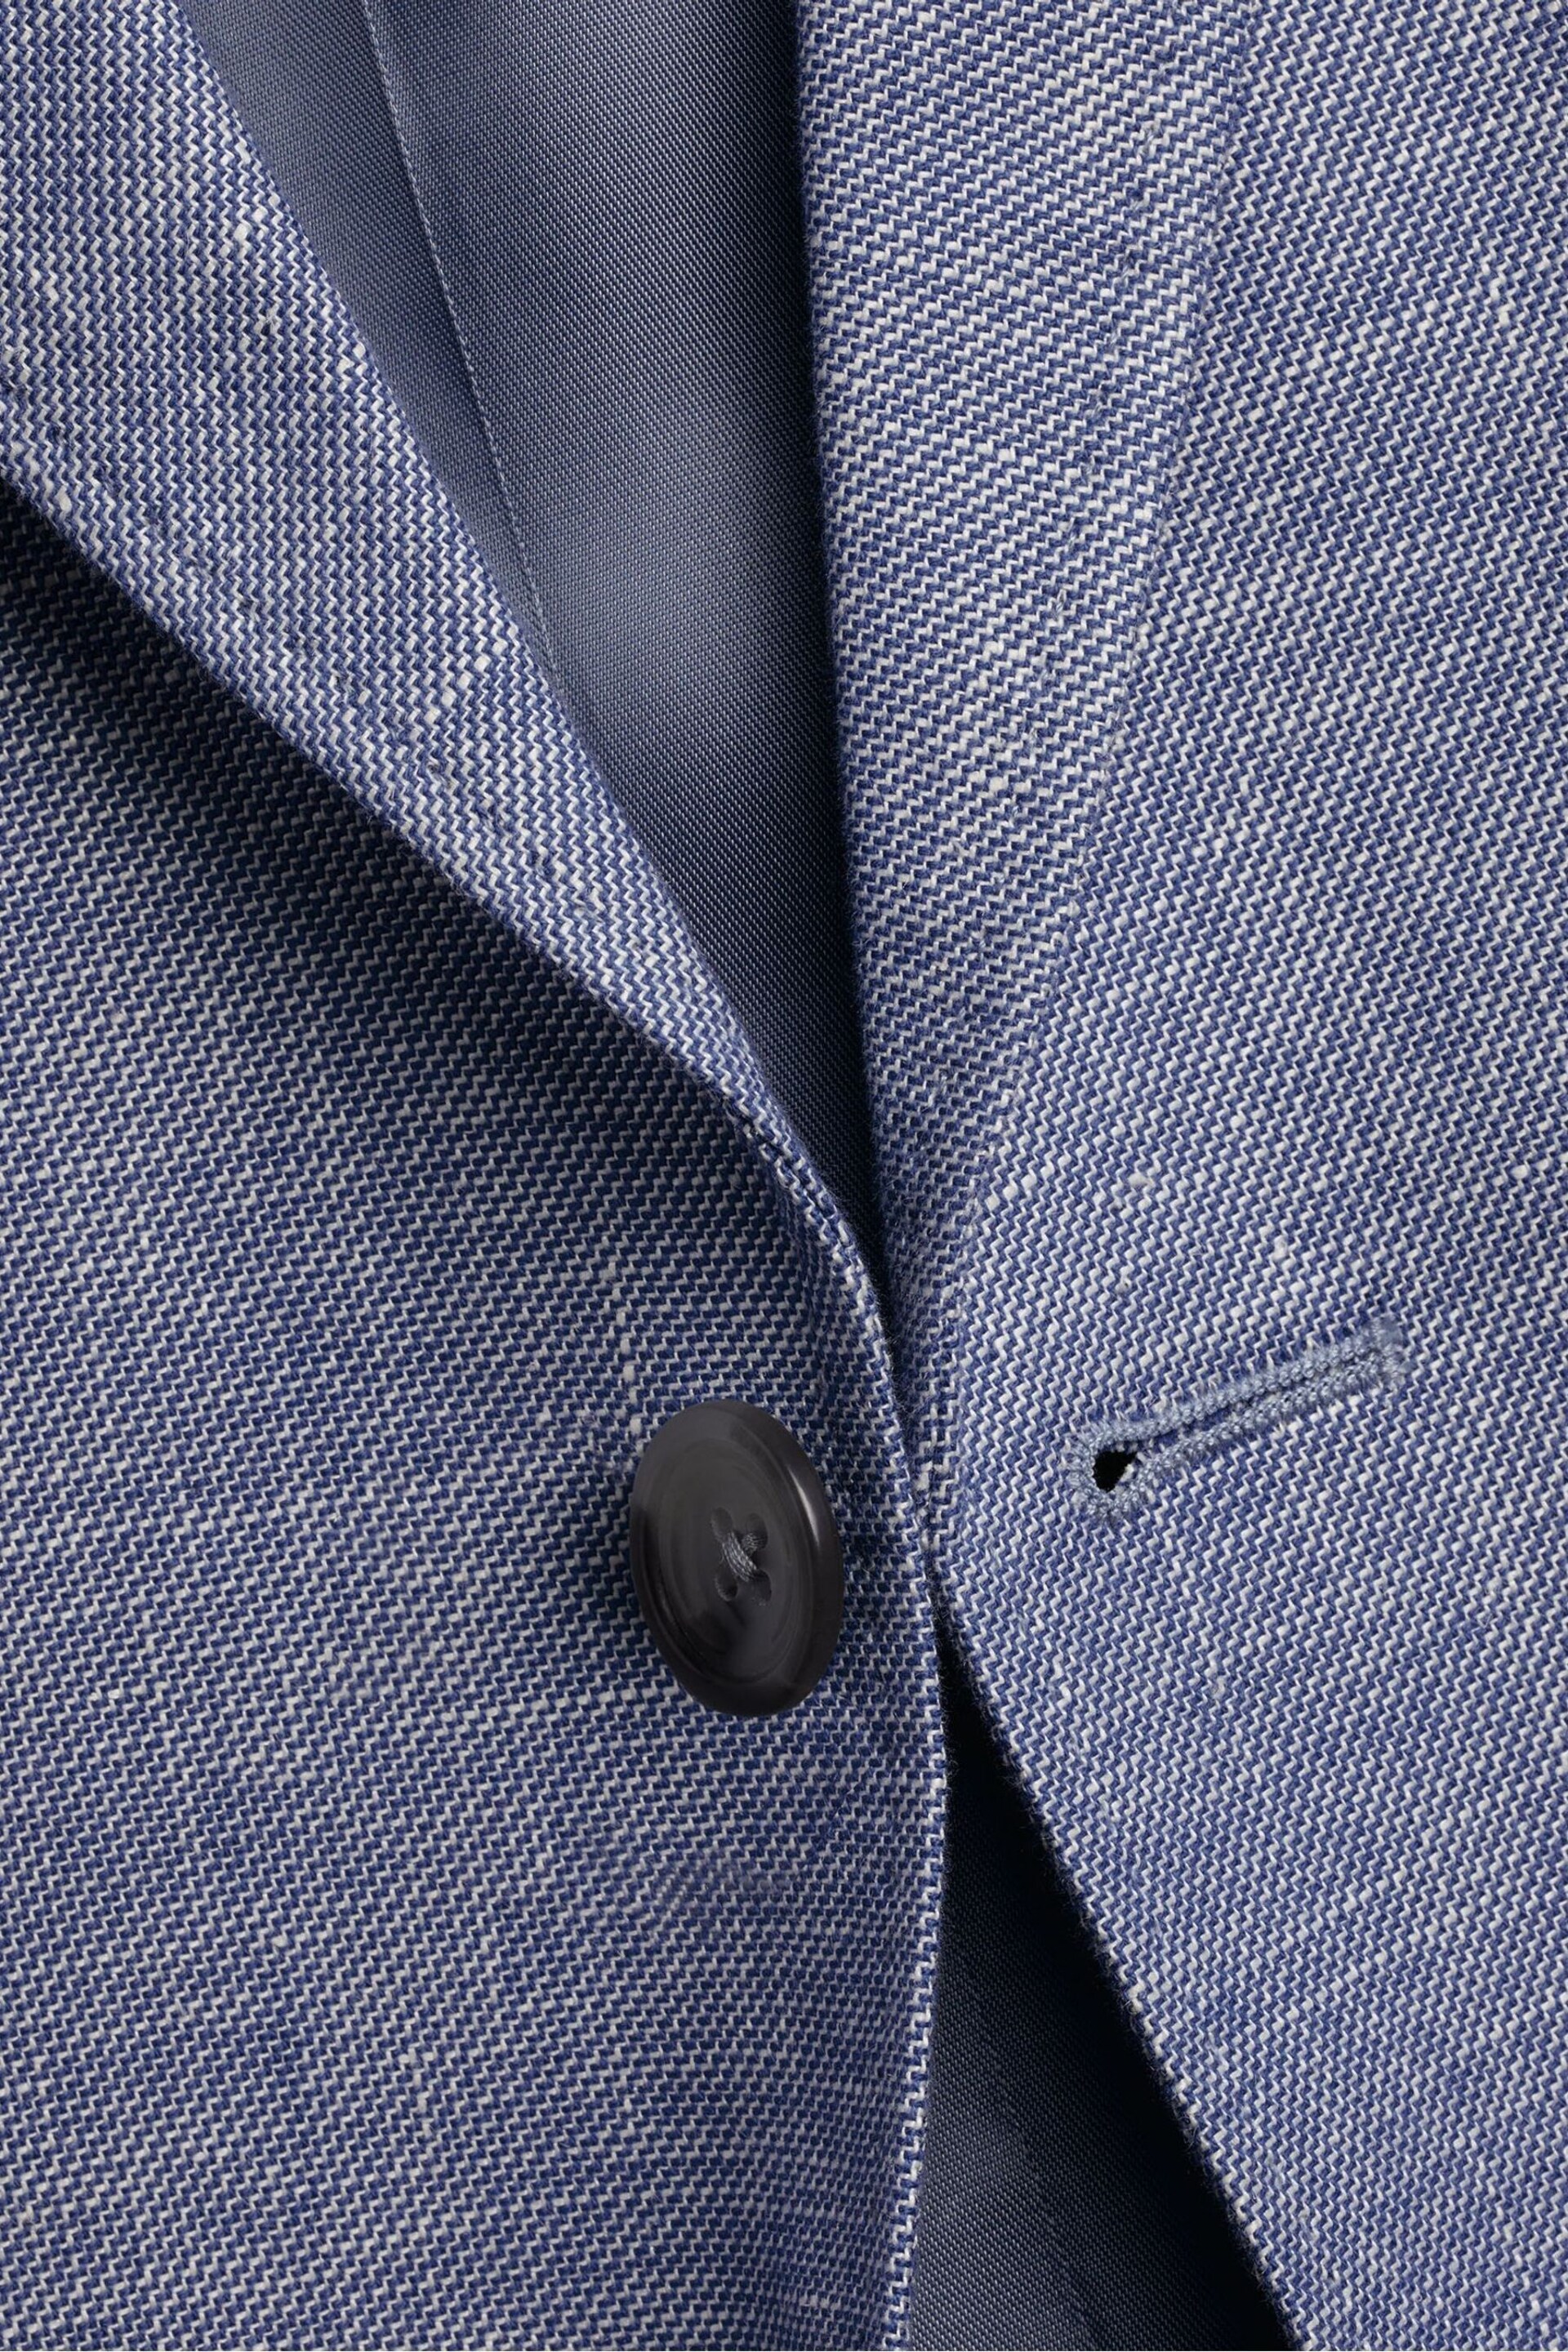 Charles Tyrwhitt Blue Linen Cotton Slim Fit Jacket - Image 4 of 5